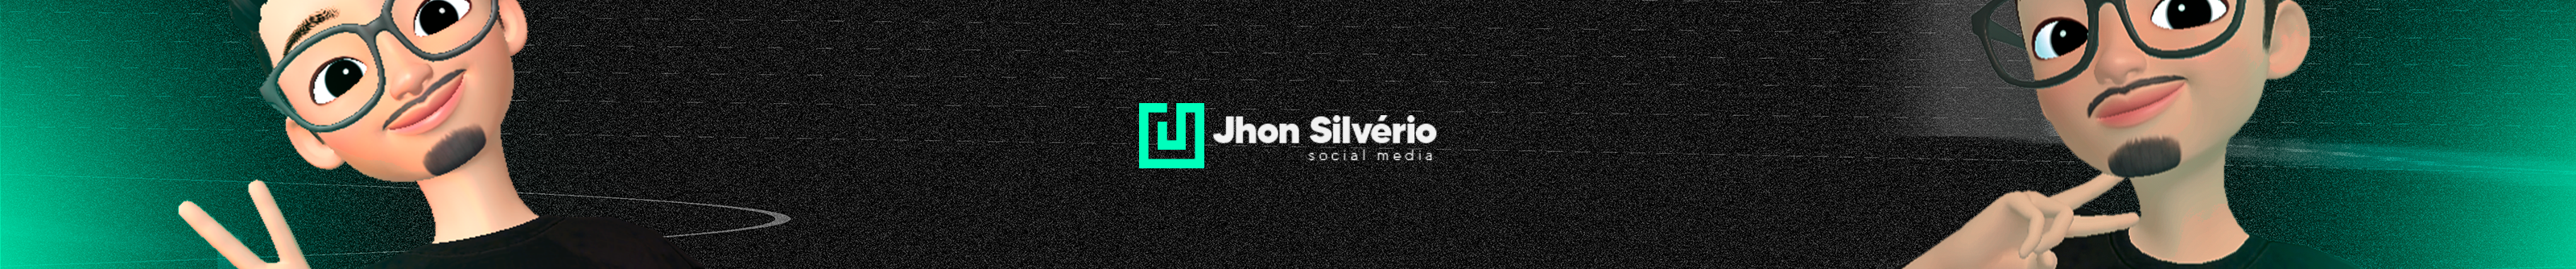 Jhon Silvério's profile banner